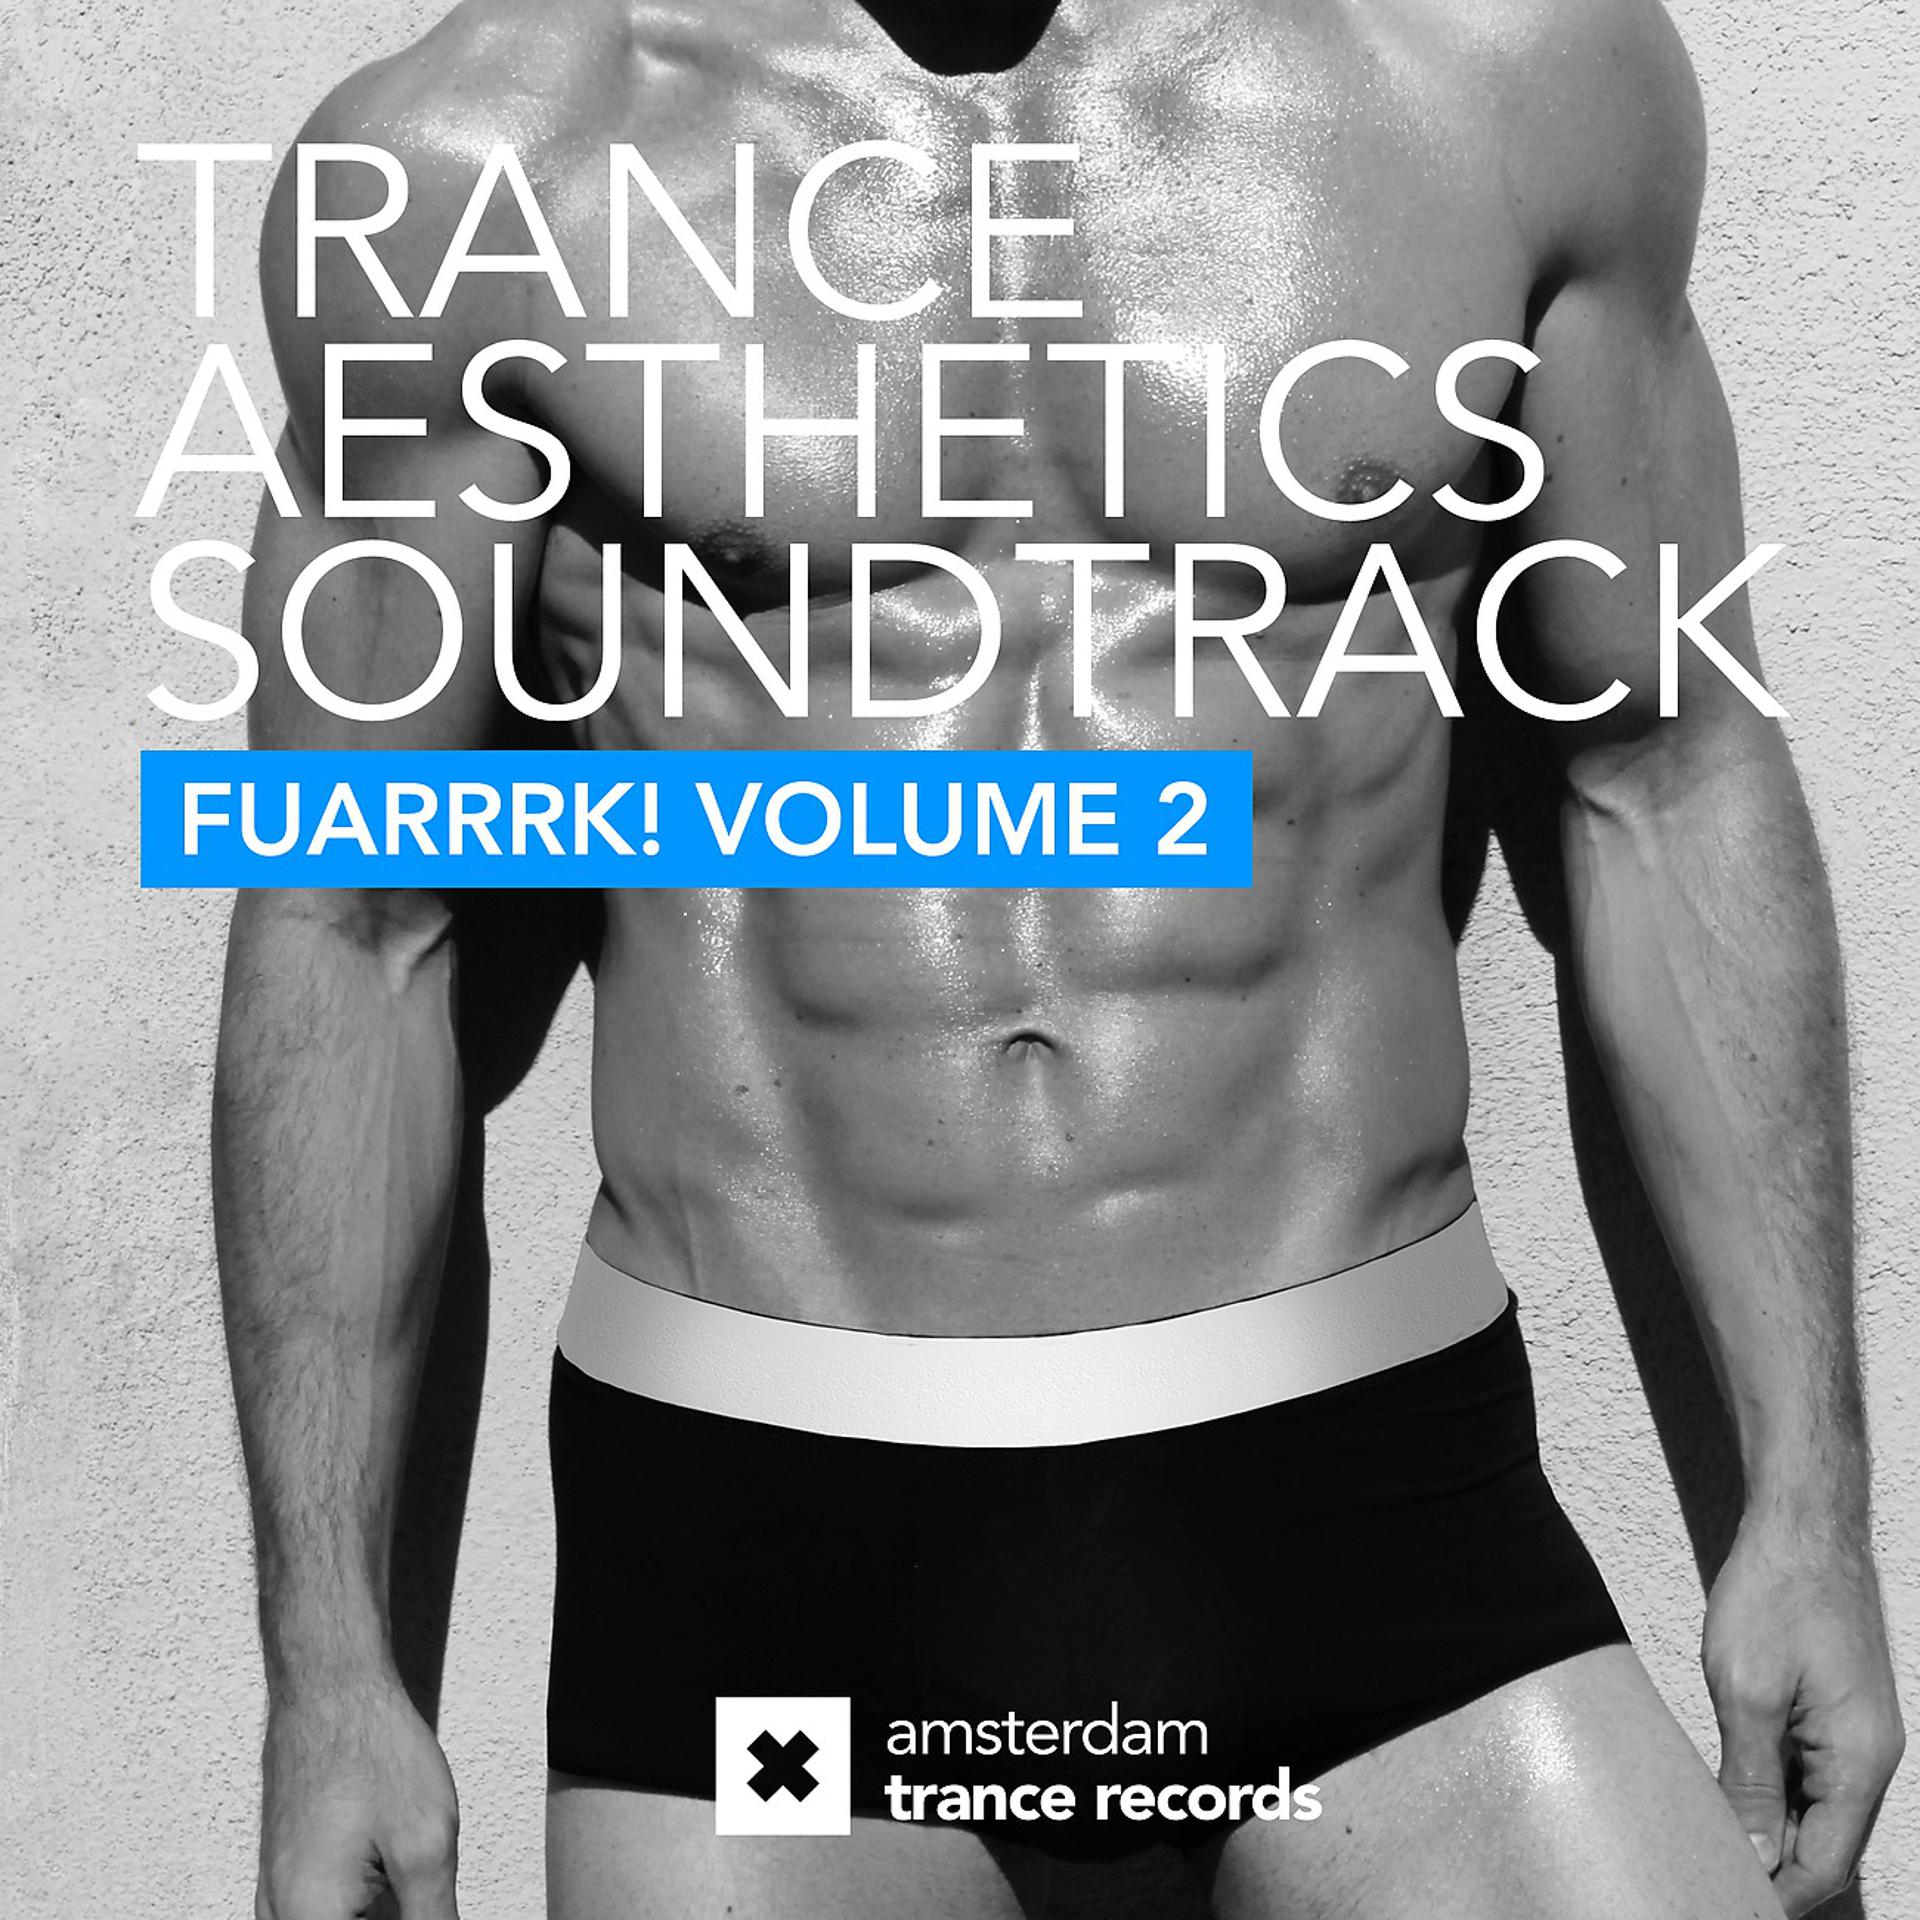 Постер альбома Trance Aesthetics Soundtrack FUARRRK!, Vol. 2